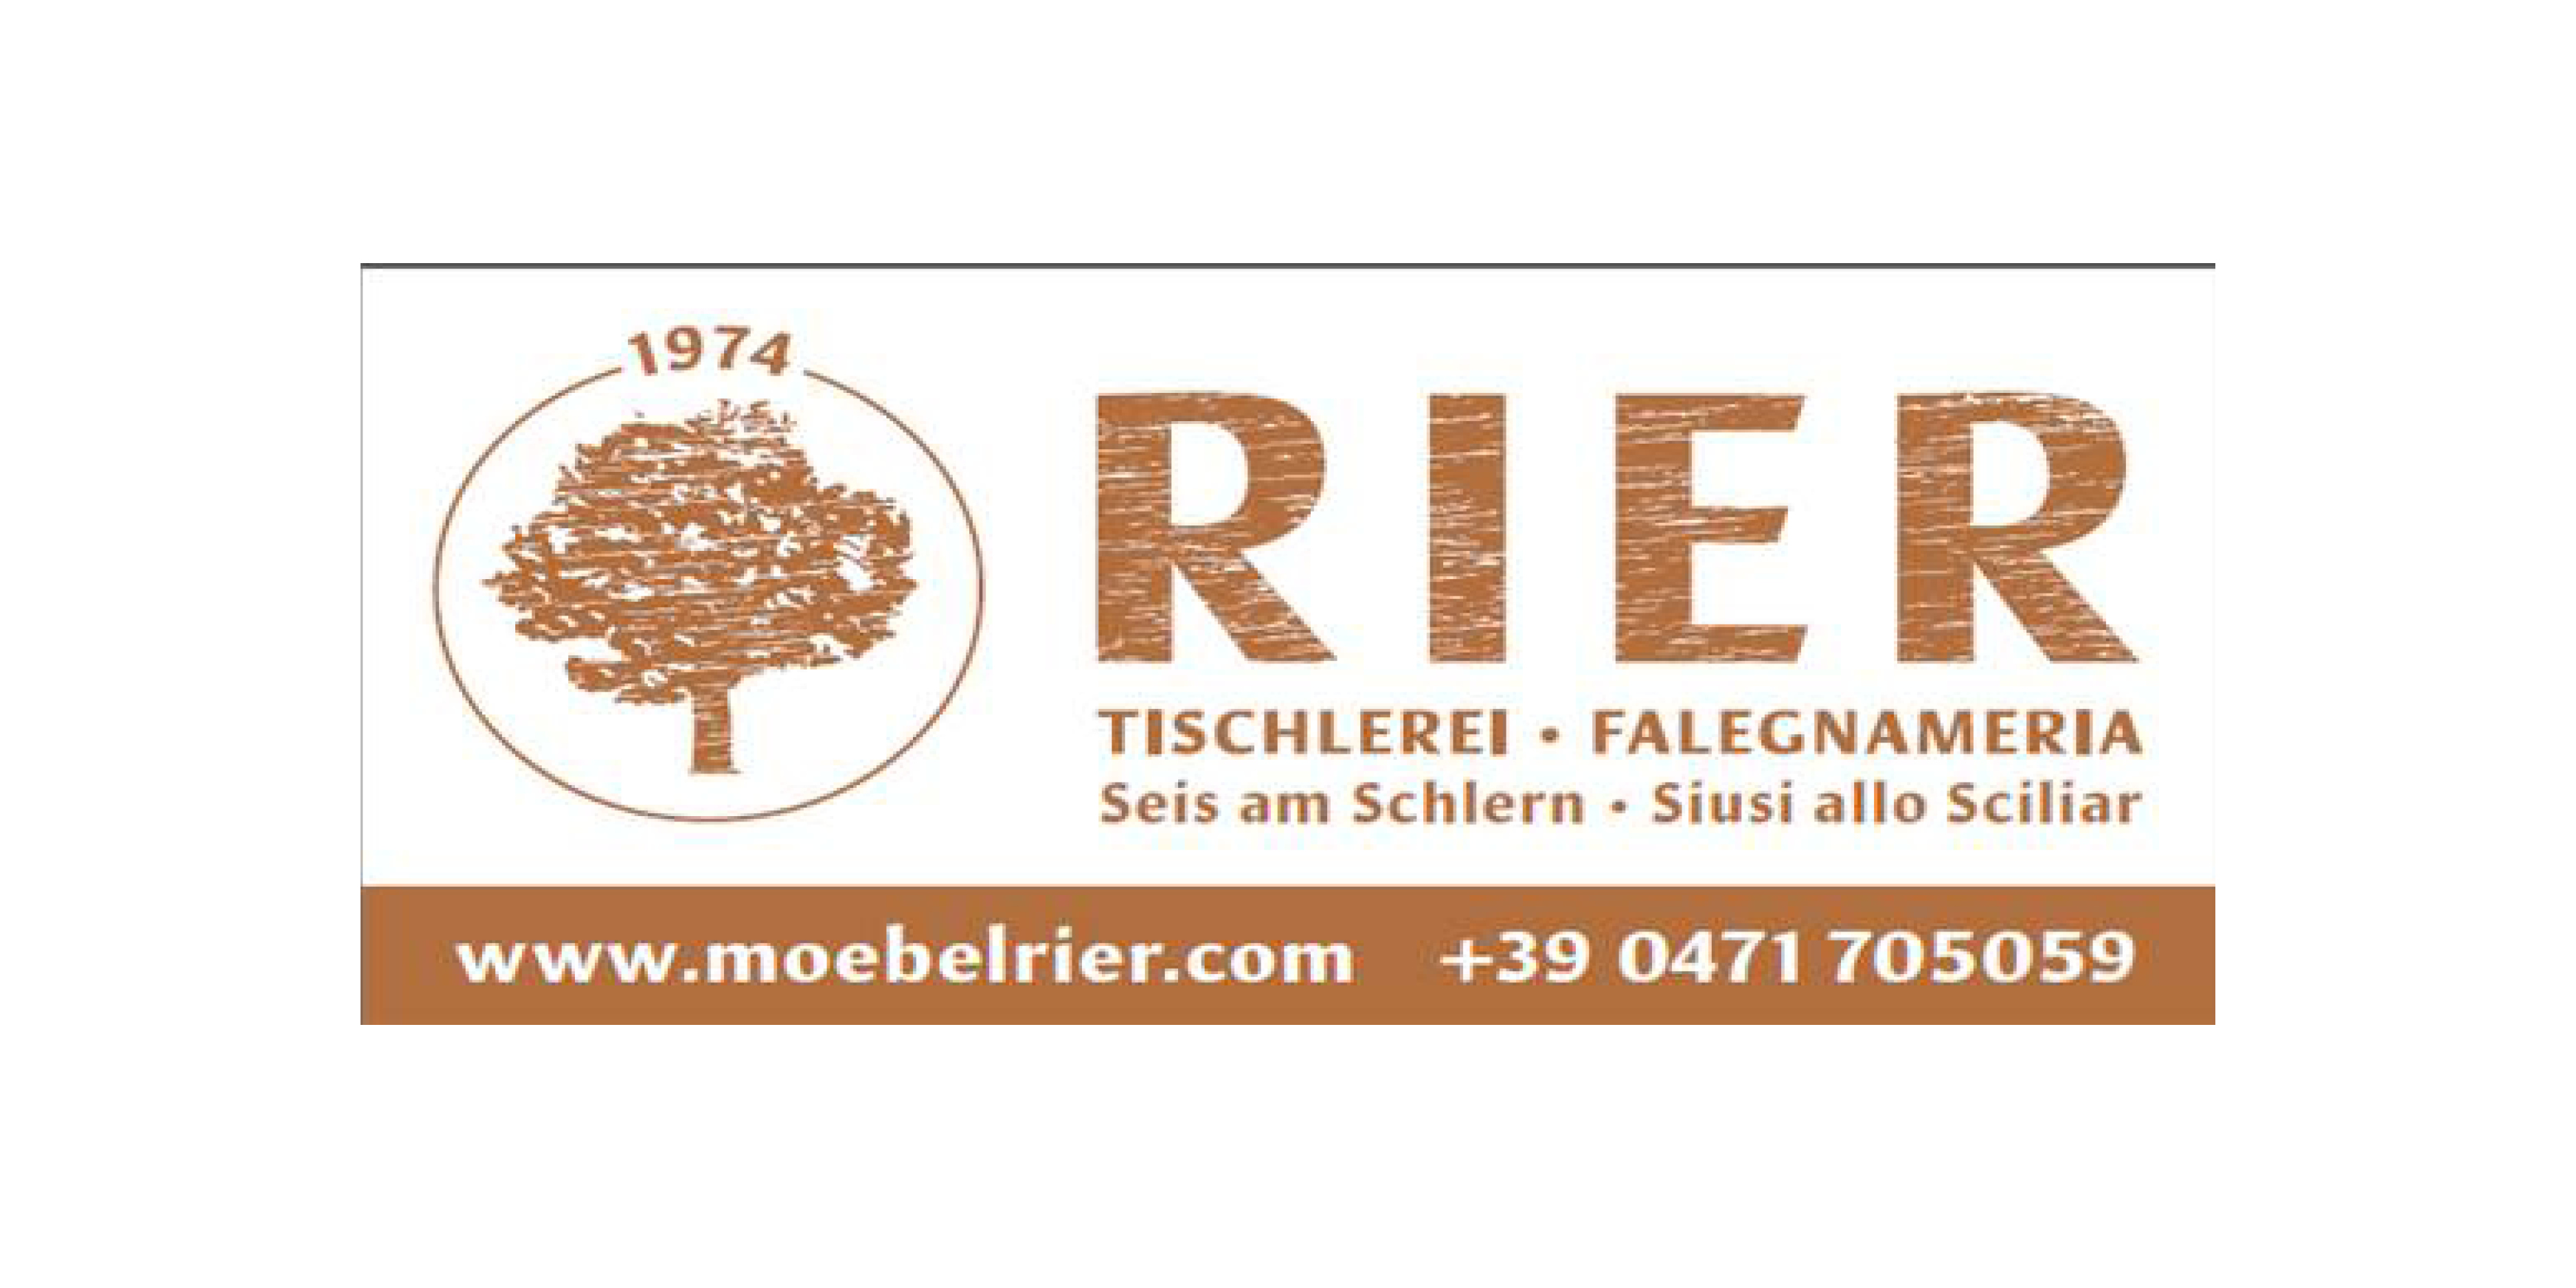 Rier Josef GmbH